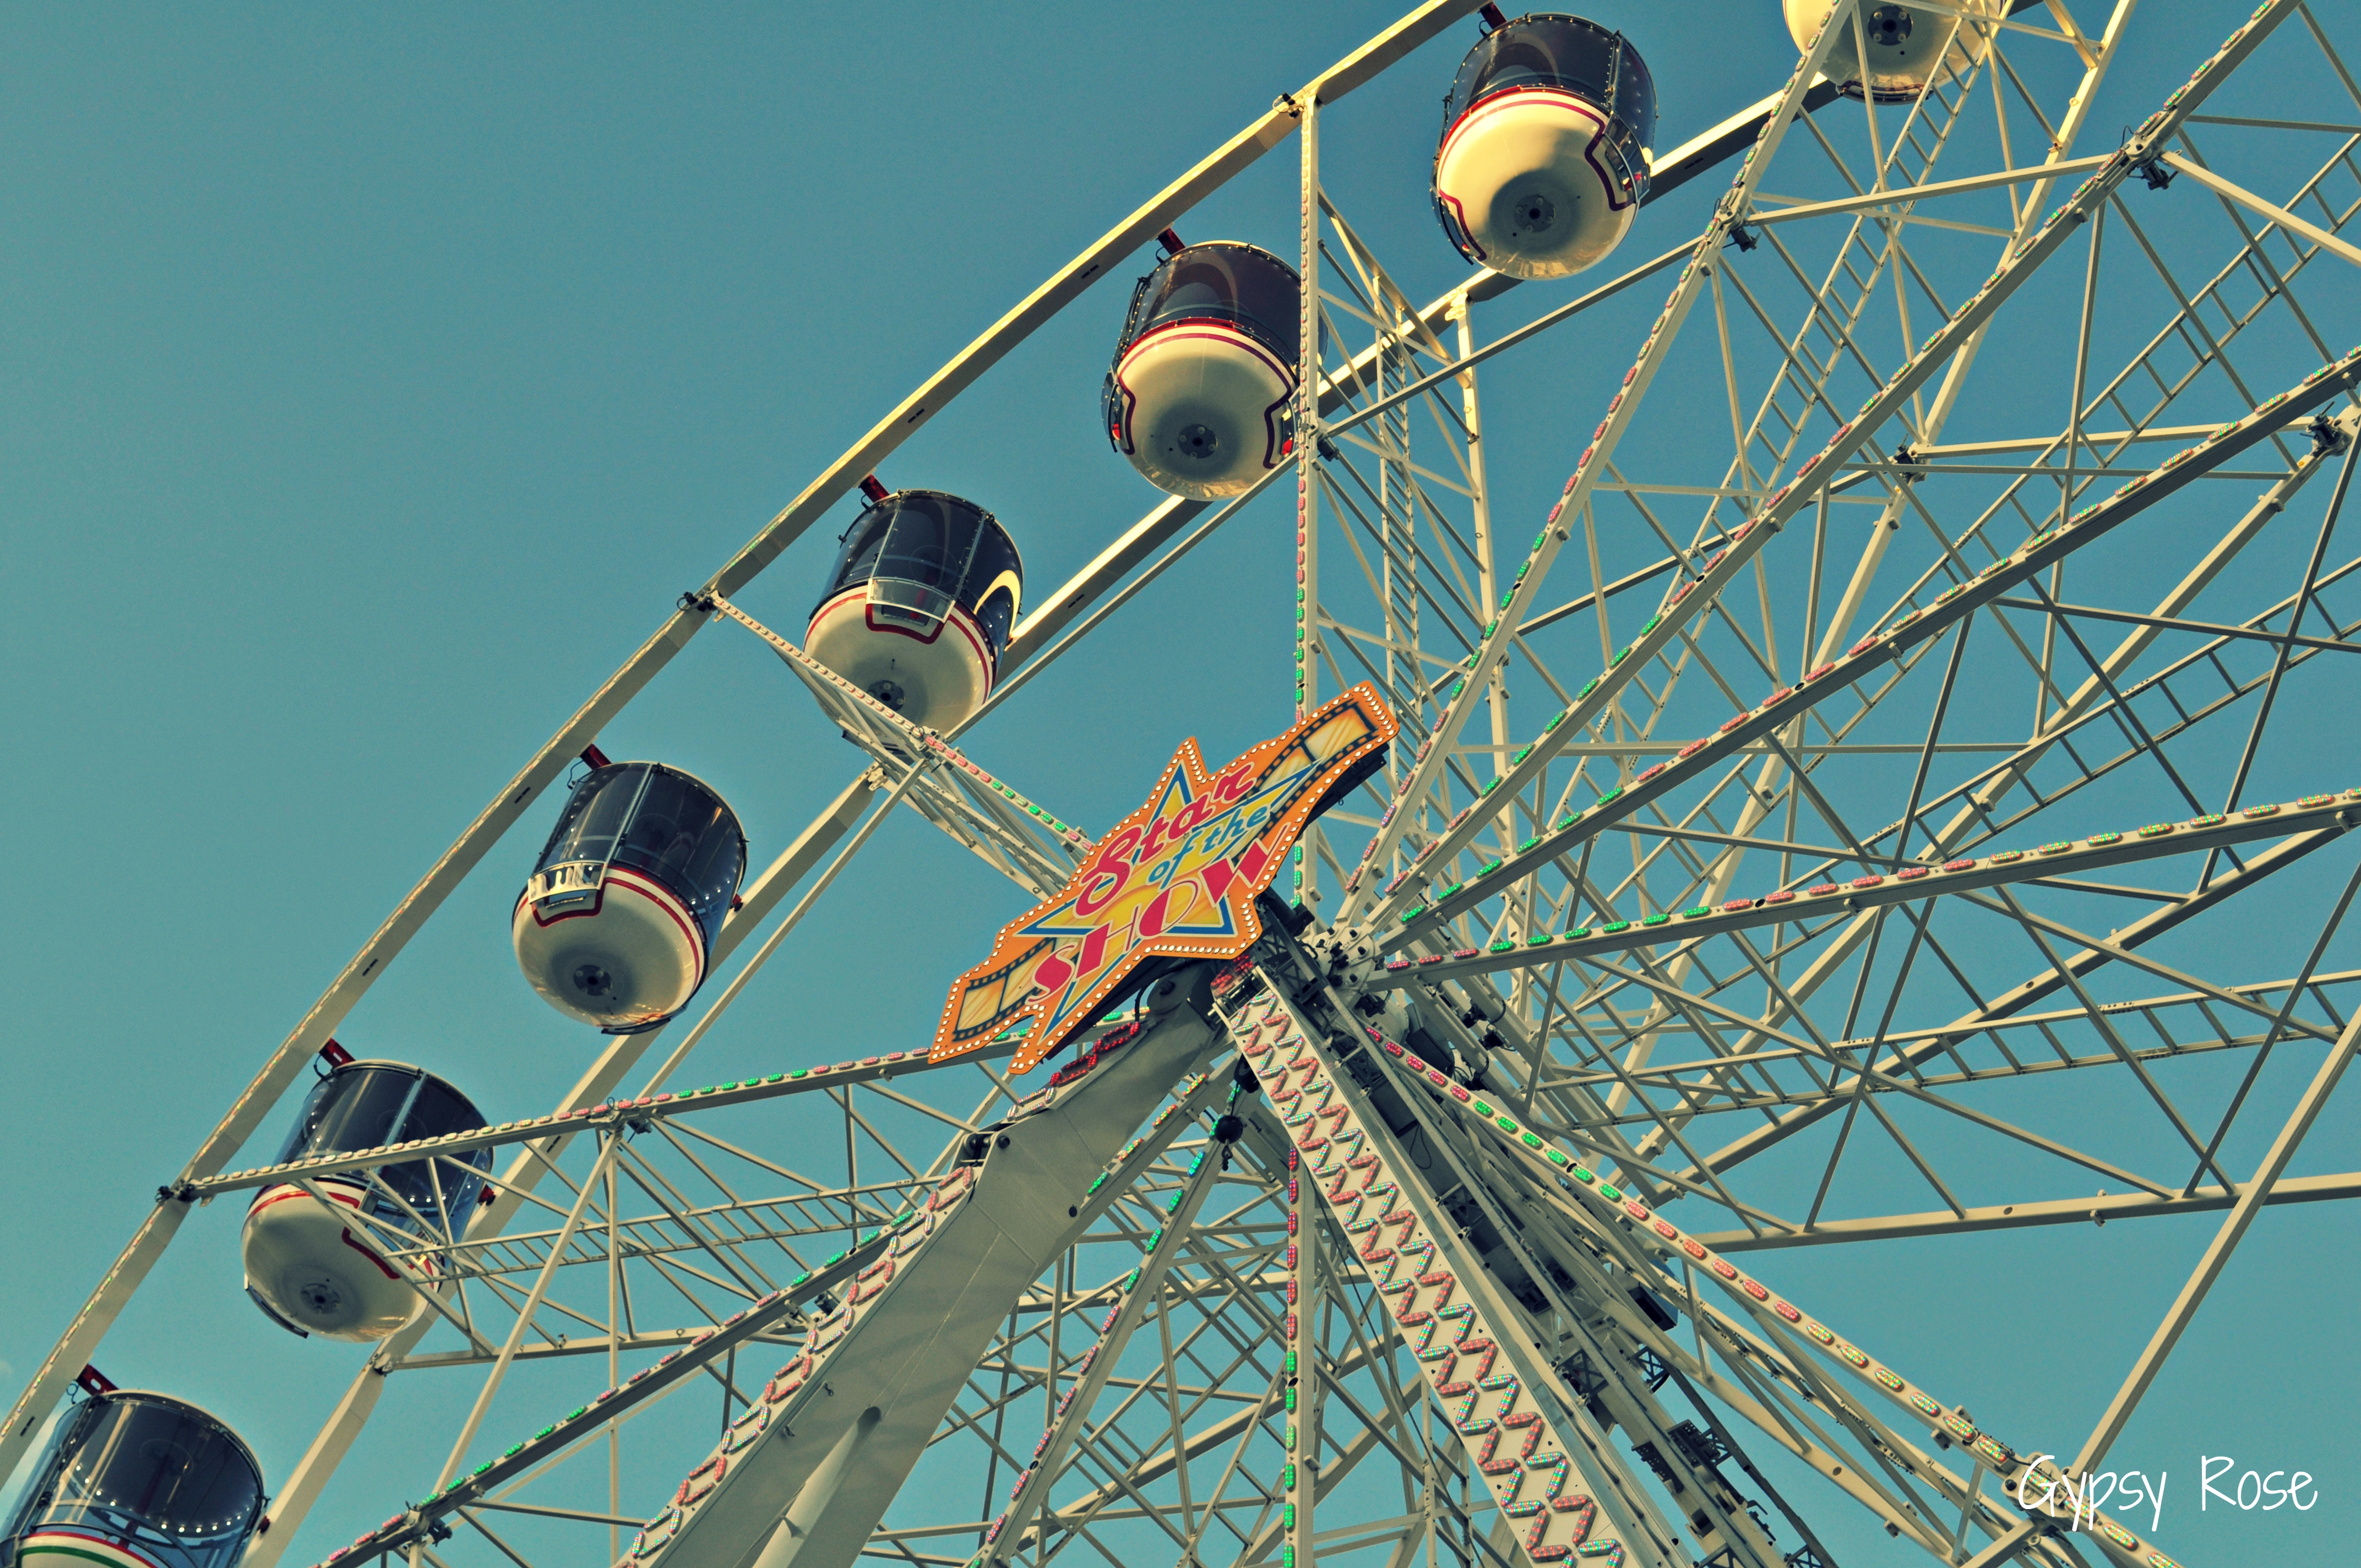 Star of the Show Ferris Wheel - Darling Harbour - Sydney